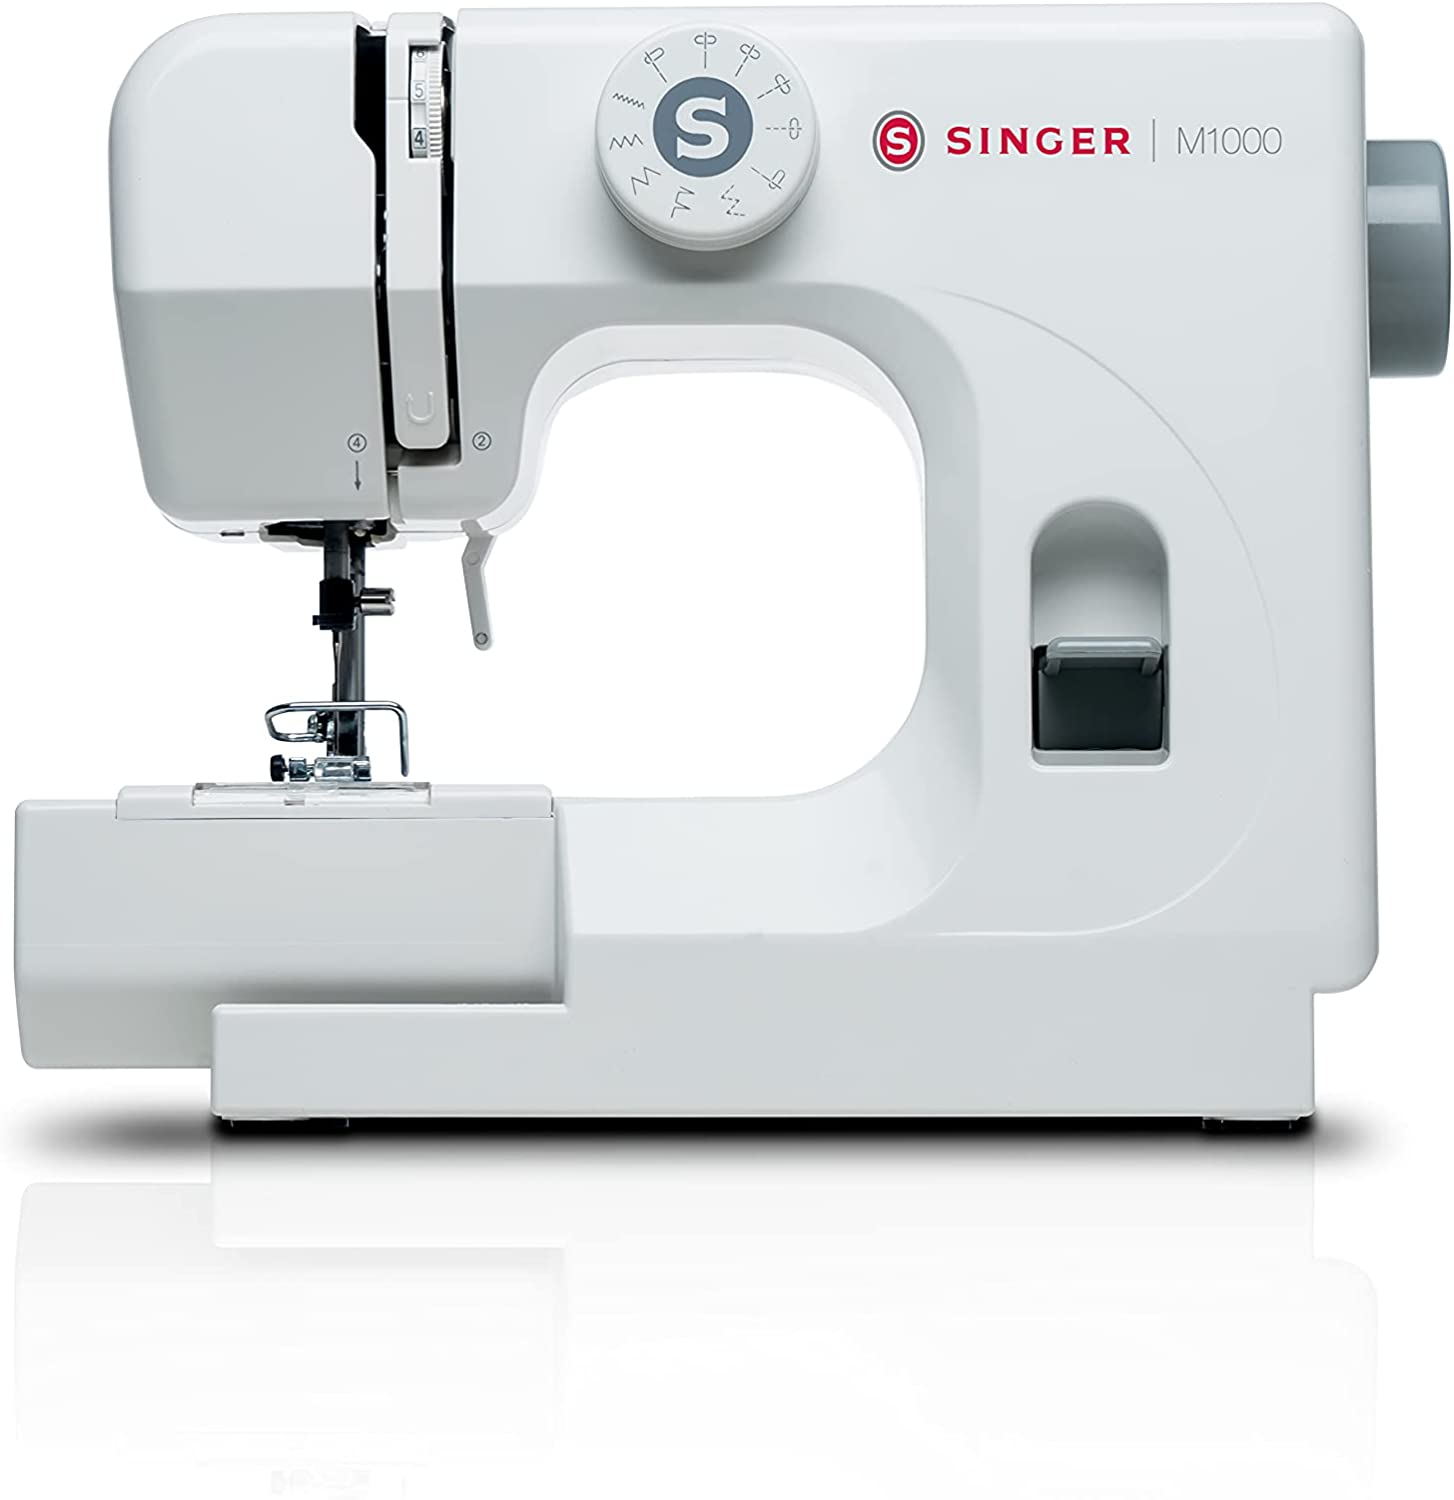 SINGER M1000 - Máquina de coser para máquina de coser, color blanco